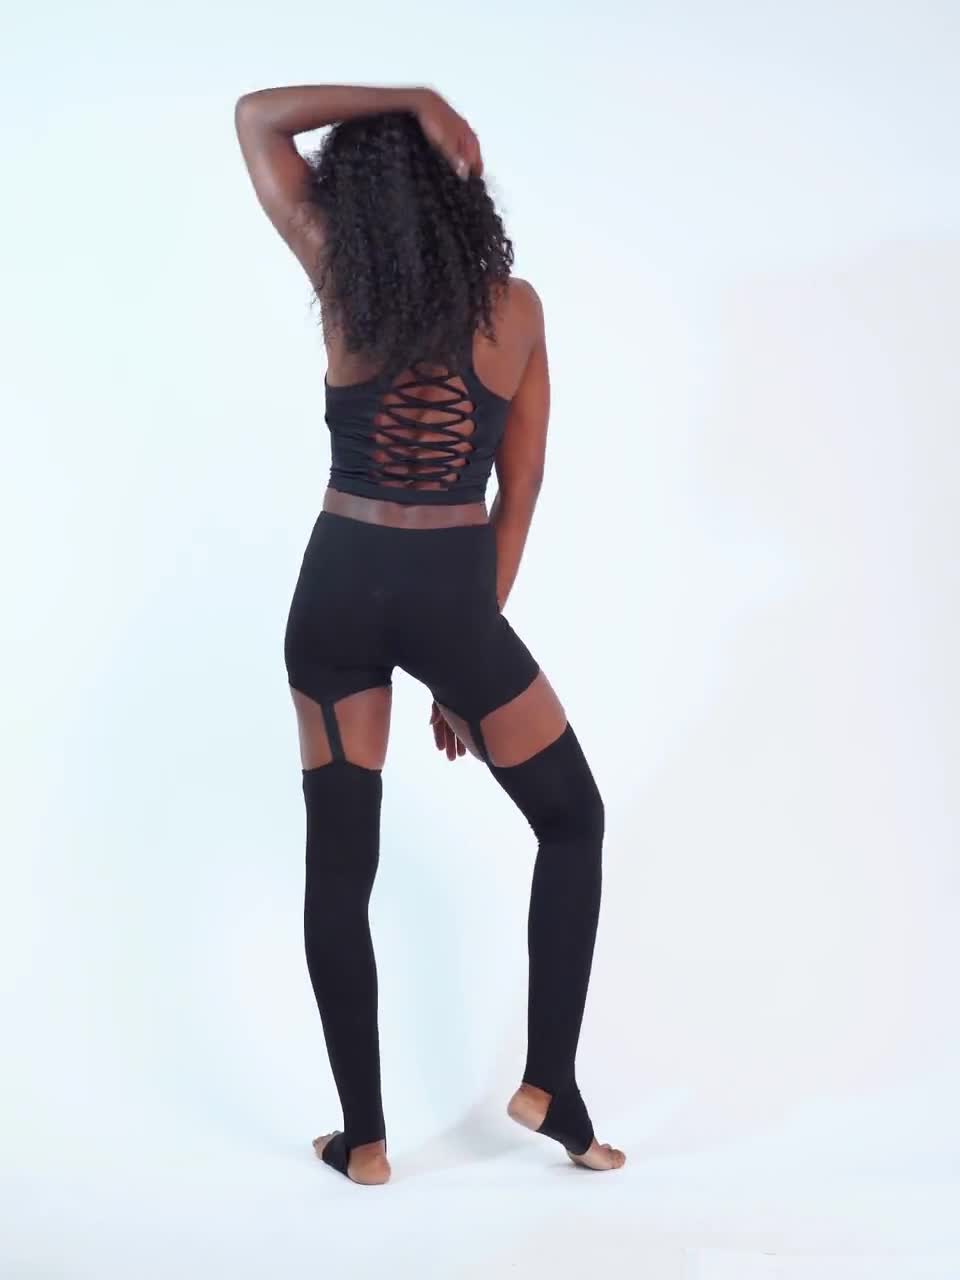 The SEXIEST Leggings Ever Created Braiding Women's Yoga Pants